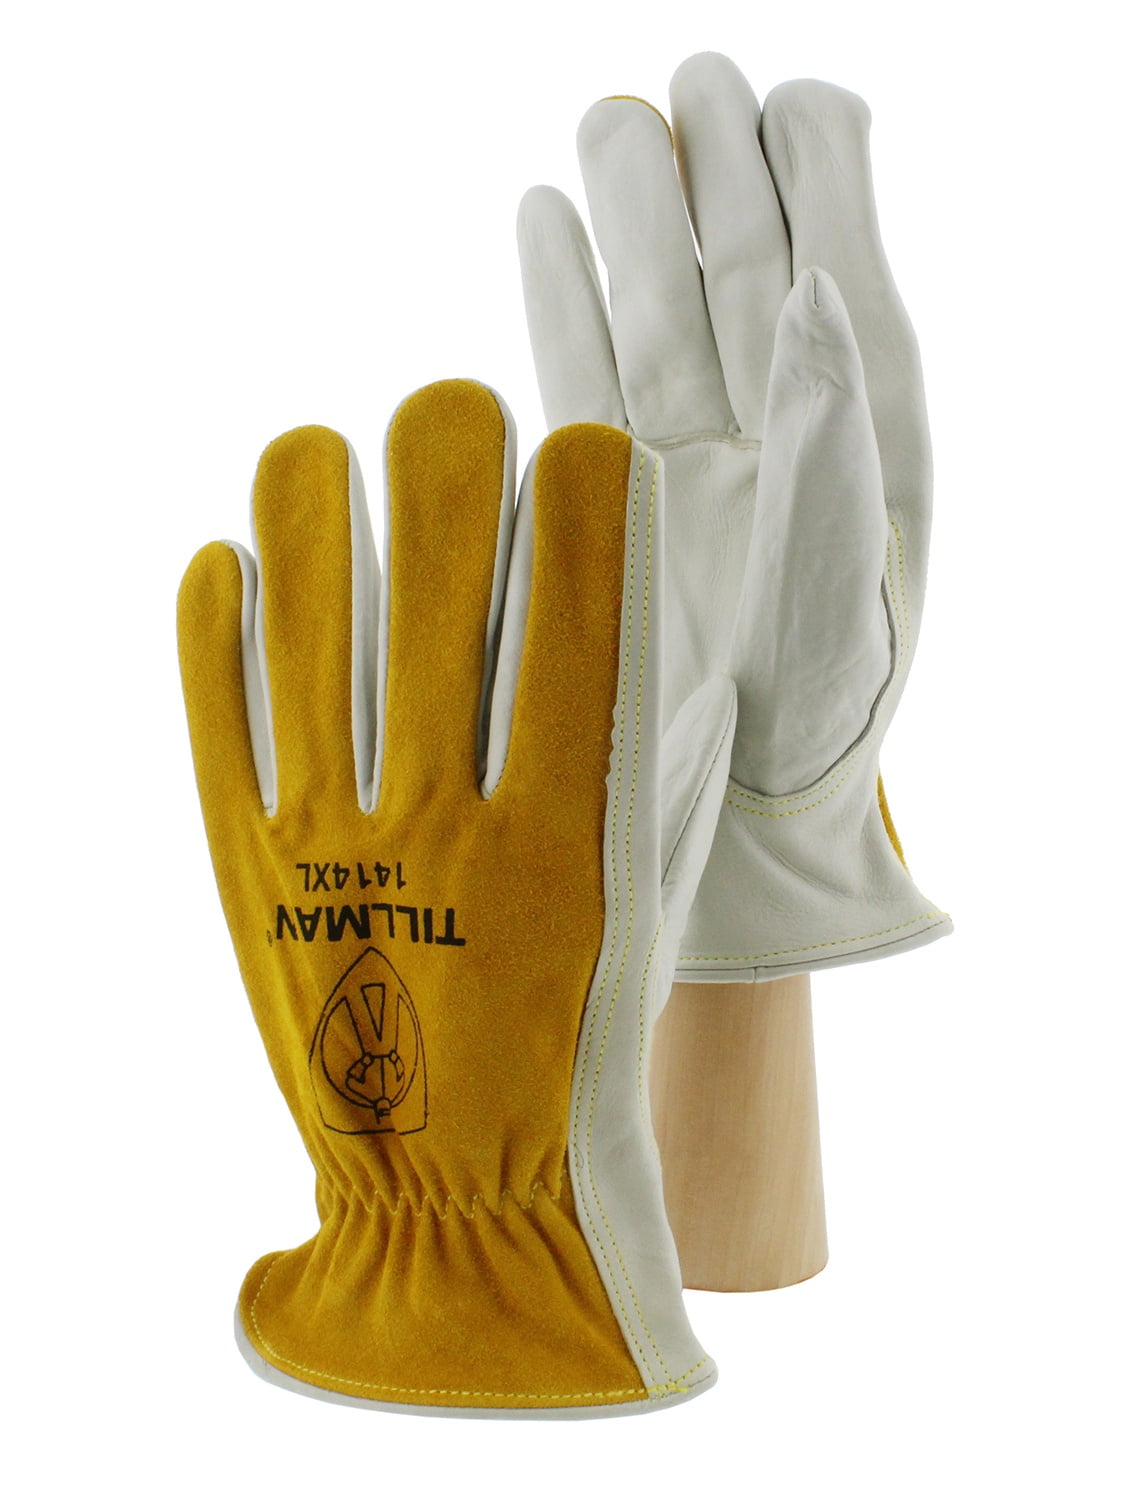 5 Pairs General Purpose White Cotton Lining Gloves Health WorkAQ